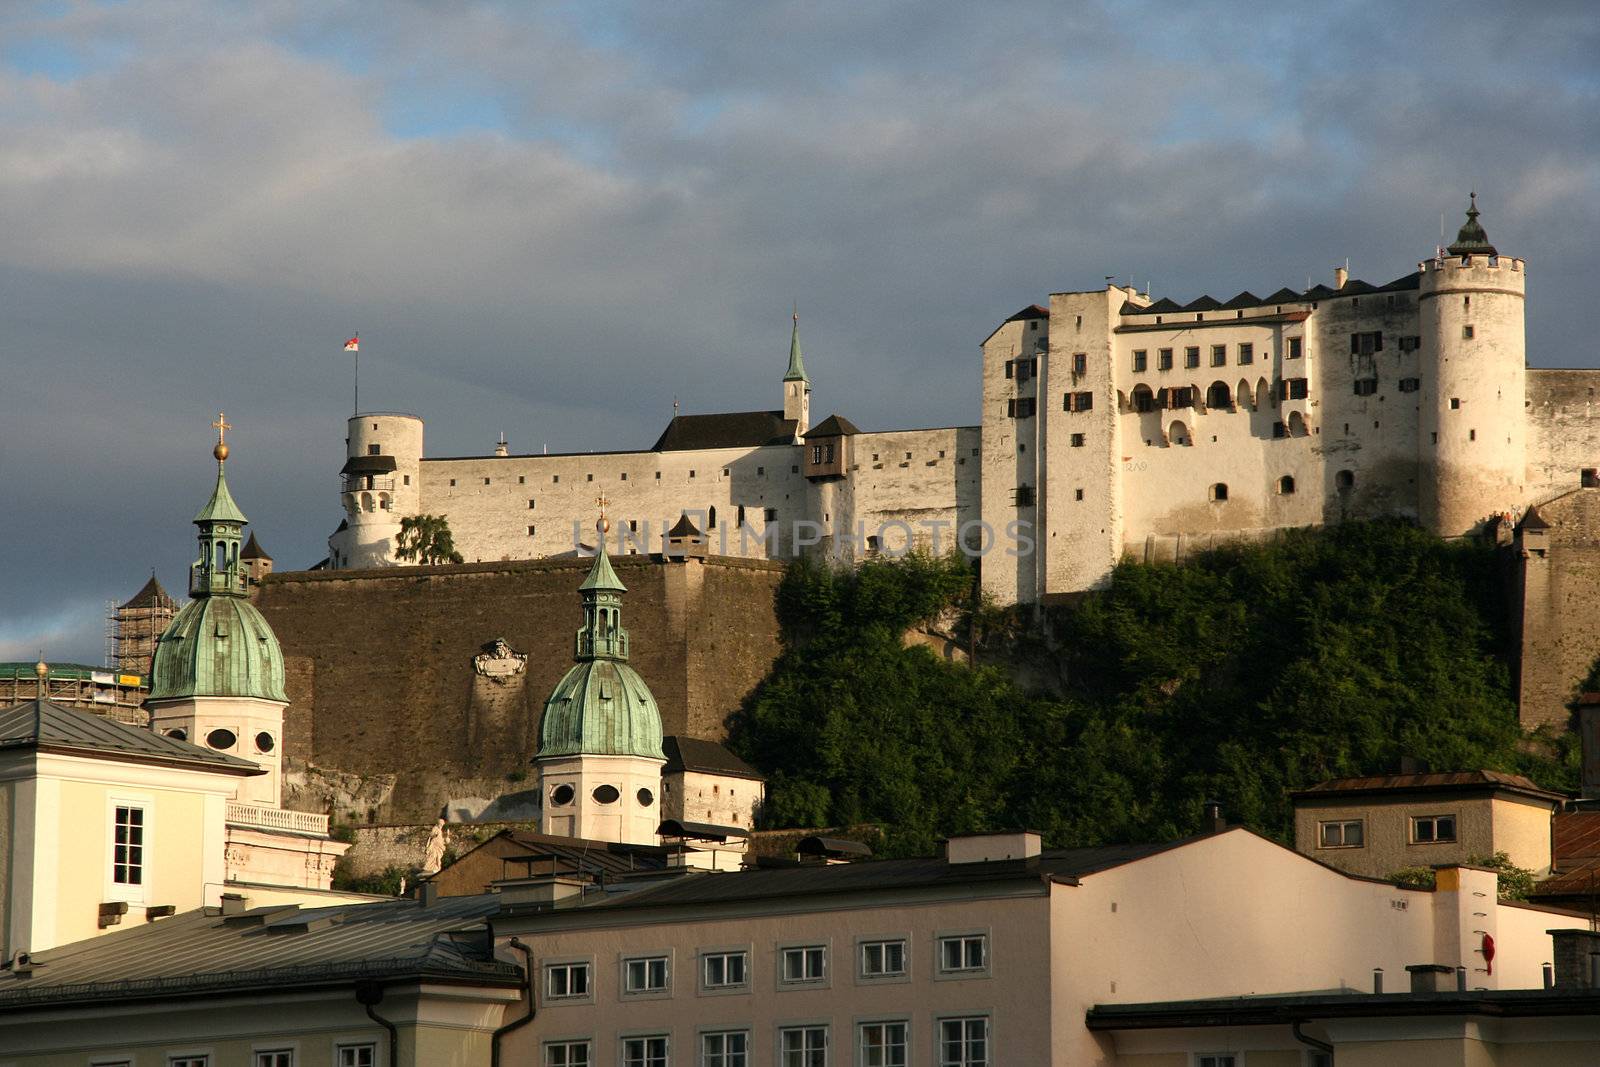 Salzburg castle (Stiftung) in the light of setting sun. Austria landmark.